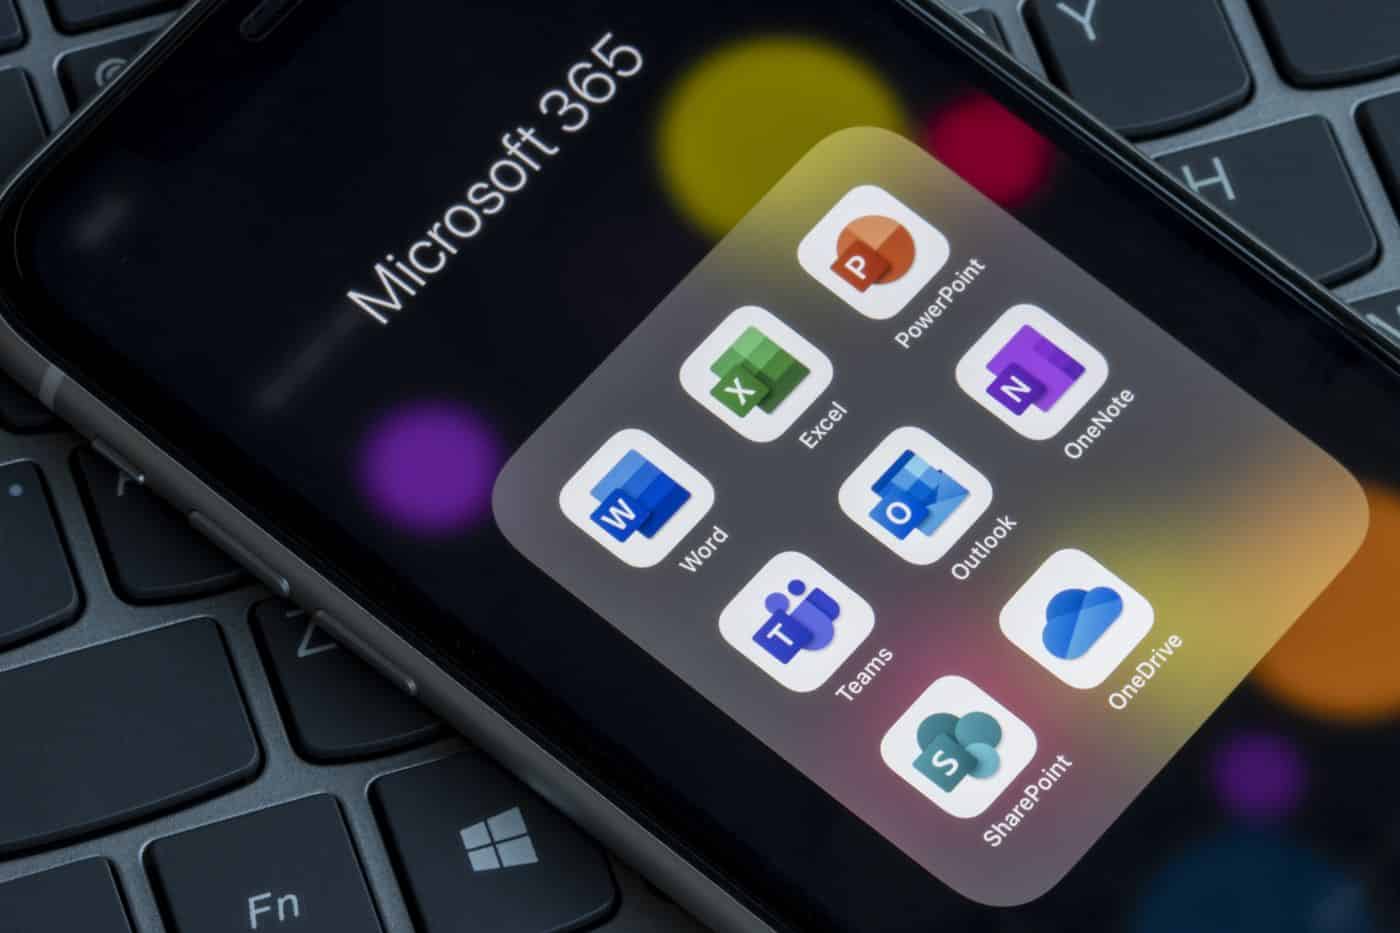 Microsoft 365 applications on a smartphone screen.